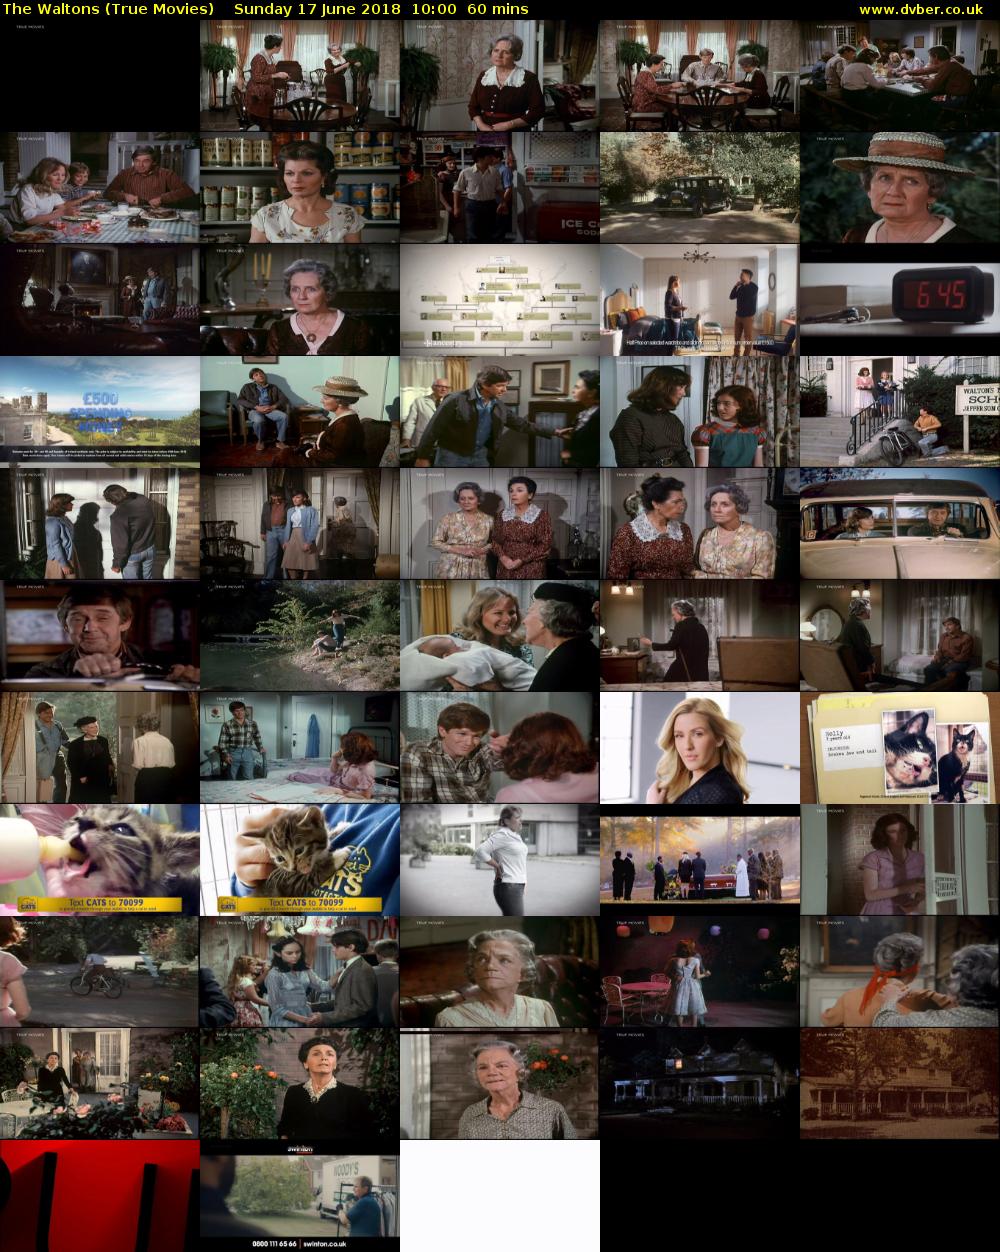 The Waltons (True Movies) Sunday 17 June 2018 10:00 - 11:00